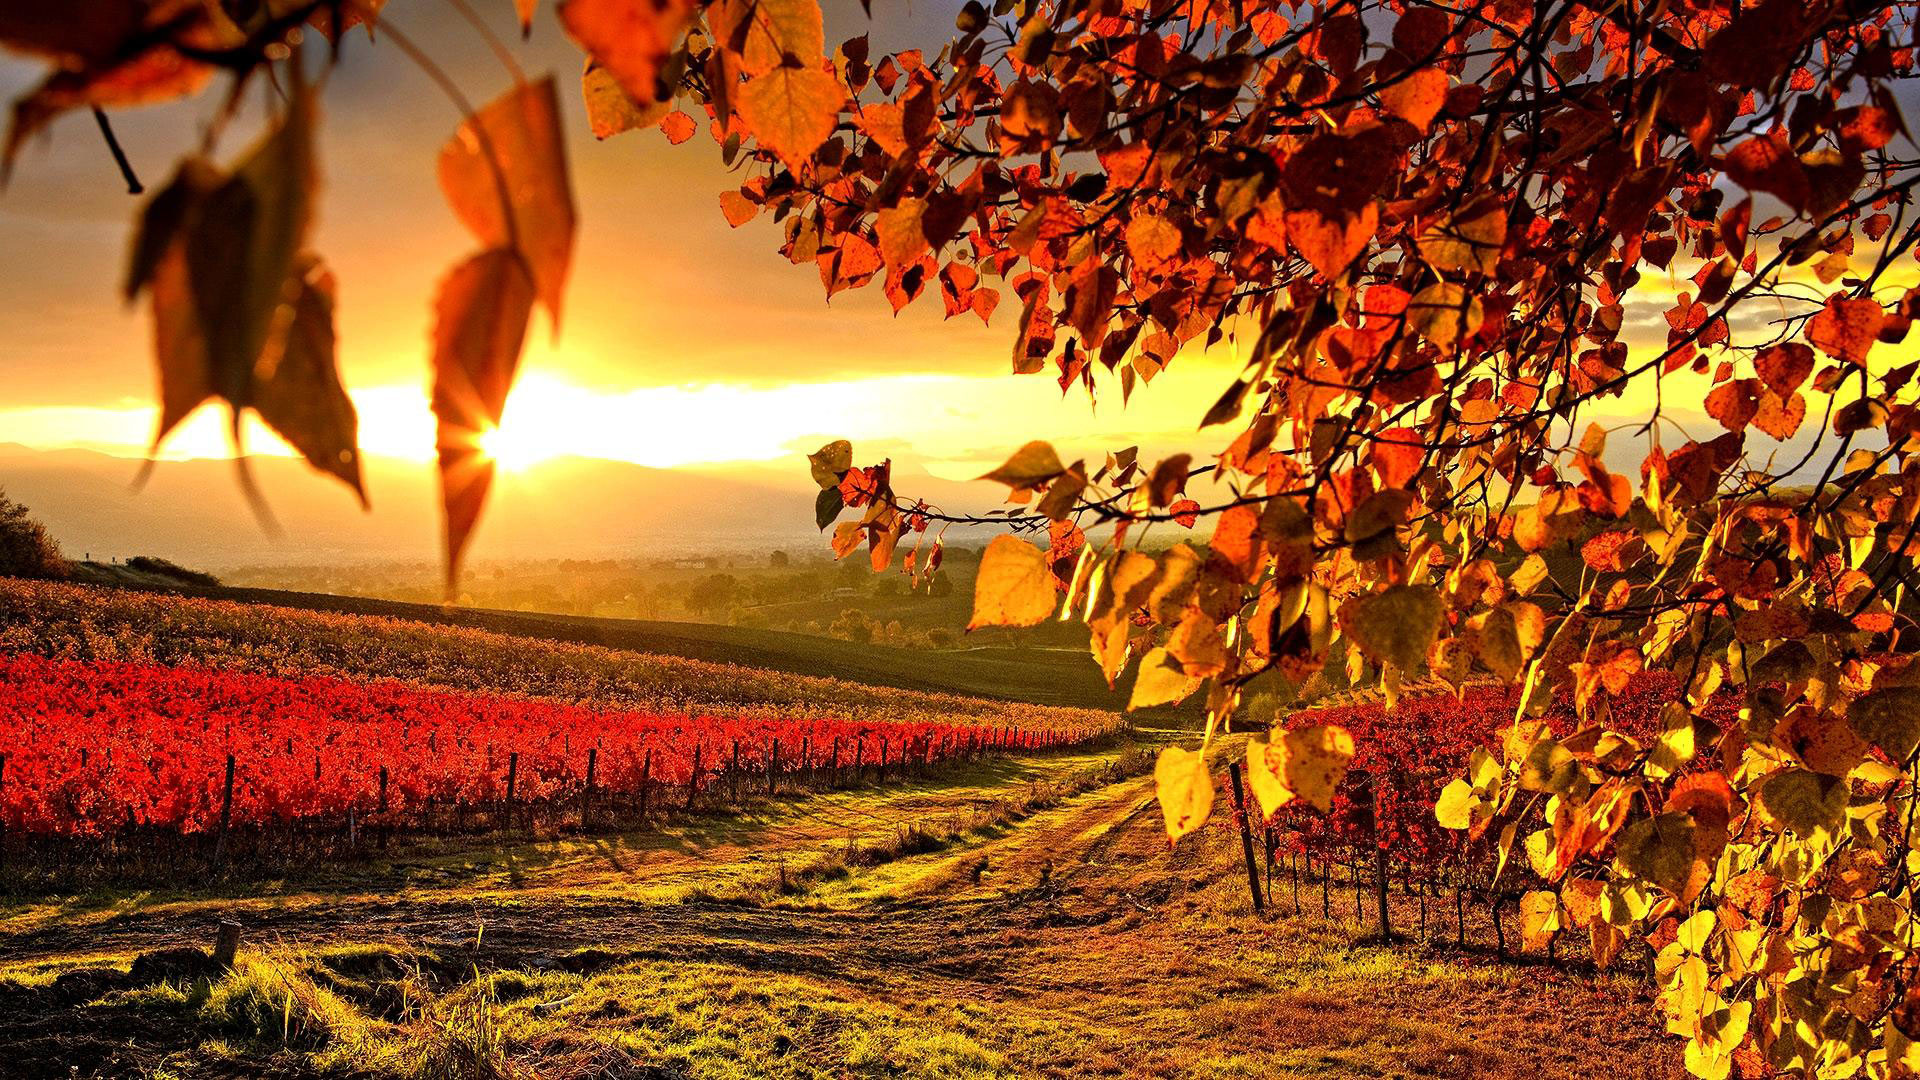 1920x1080 hd pics photos orange beautiful vineyard nature desktop background wallpaper